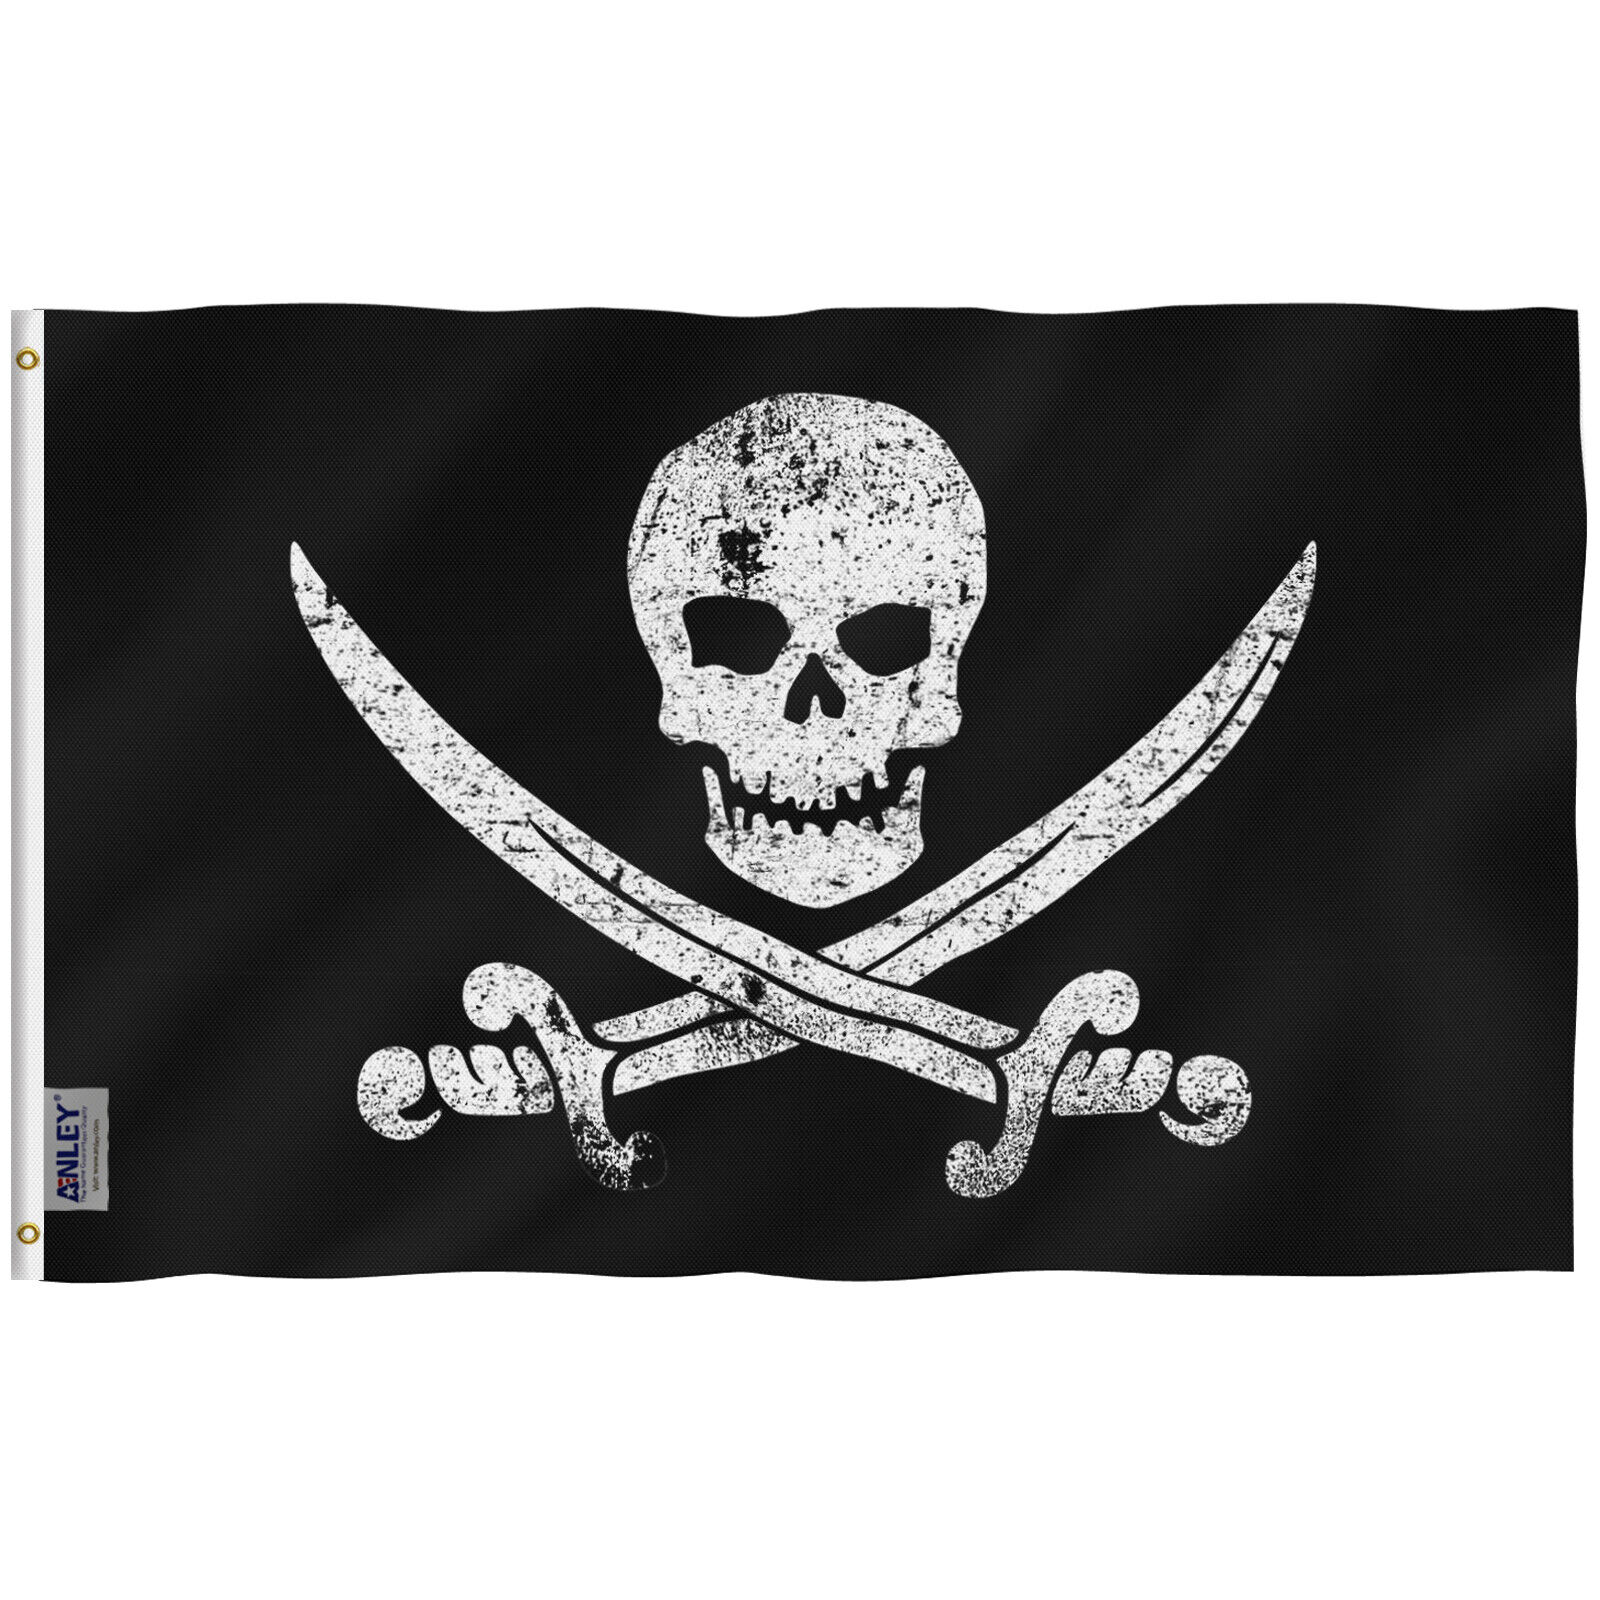 Anley Fly Breeze 3x5 Ft Jack Rackham Pirate Flag - Jolly Roger Flags Polyester 